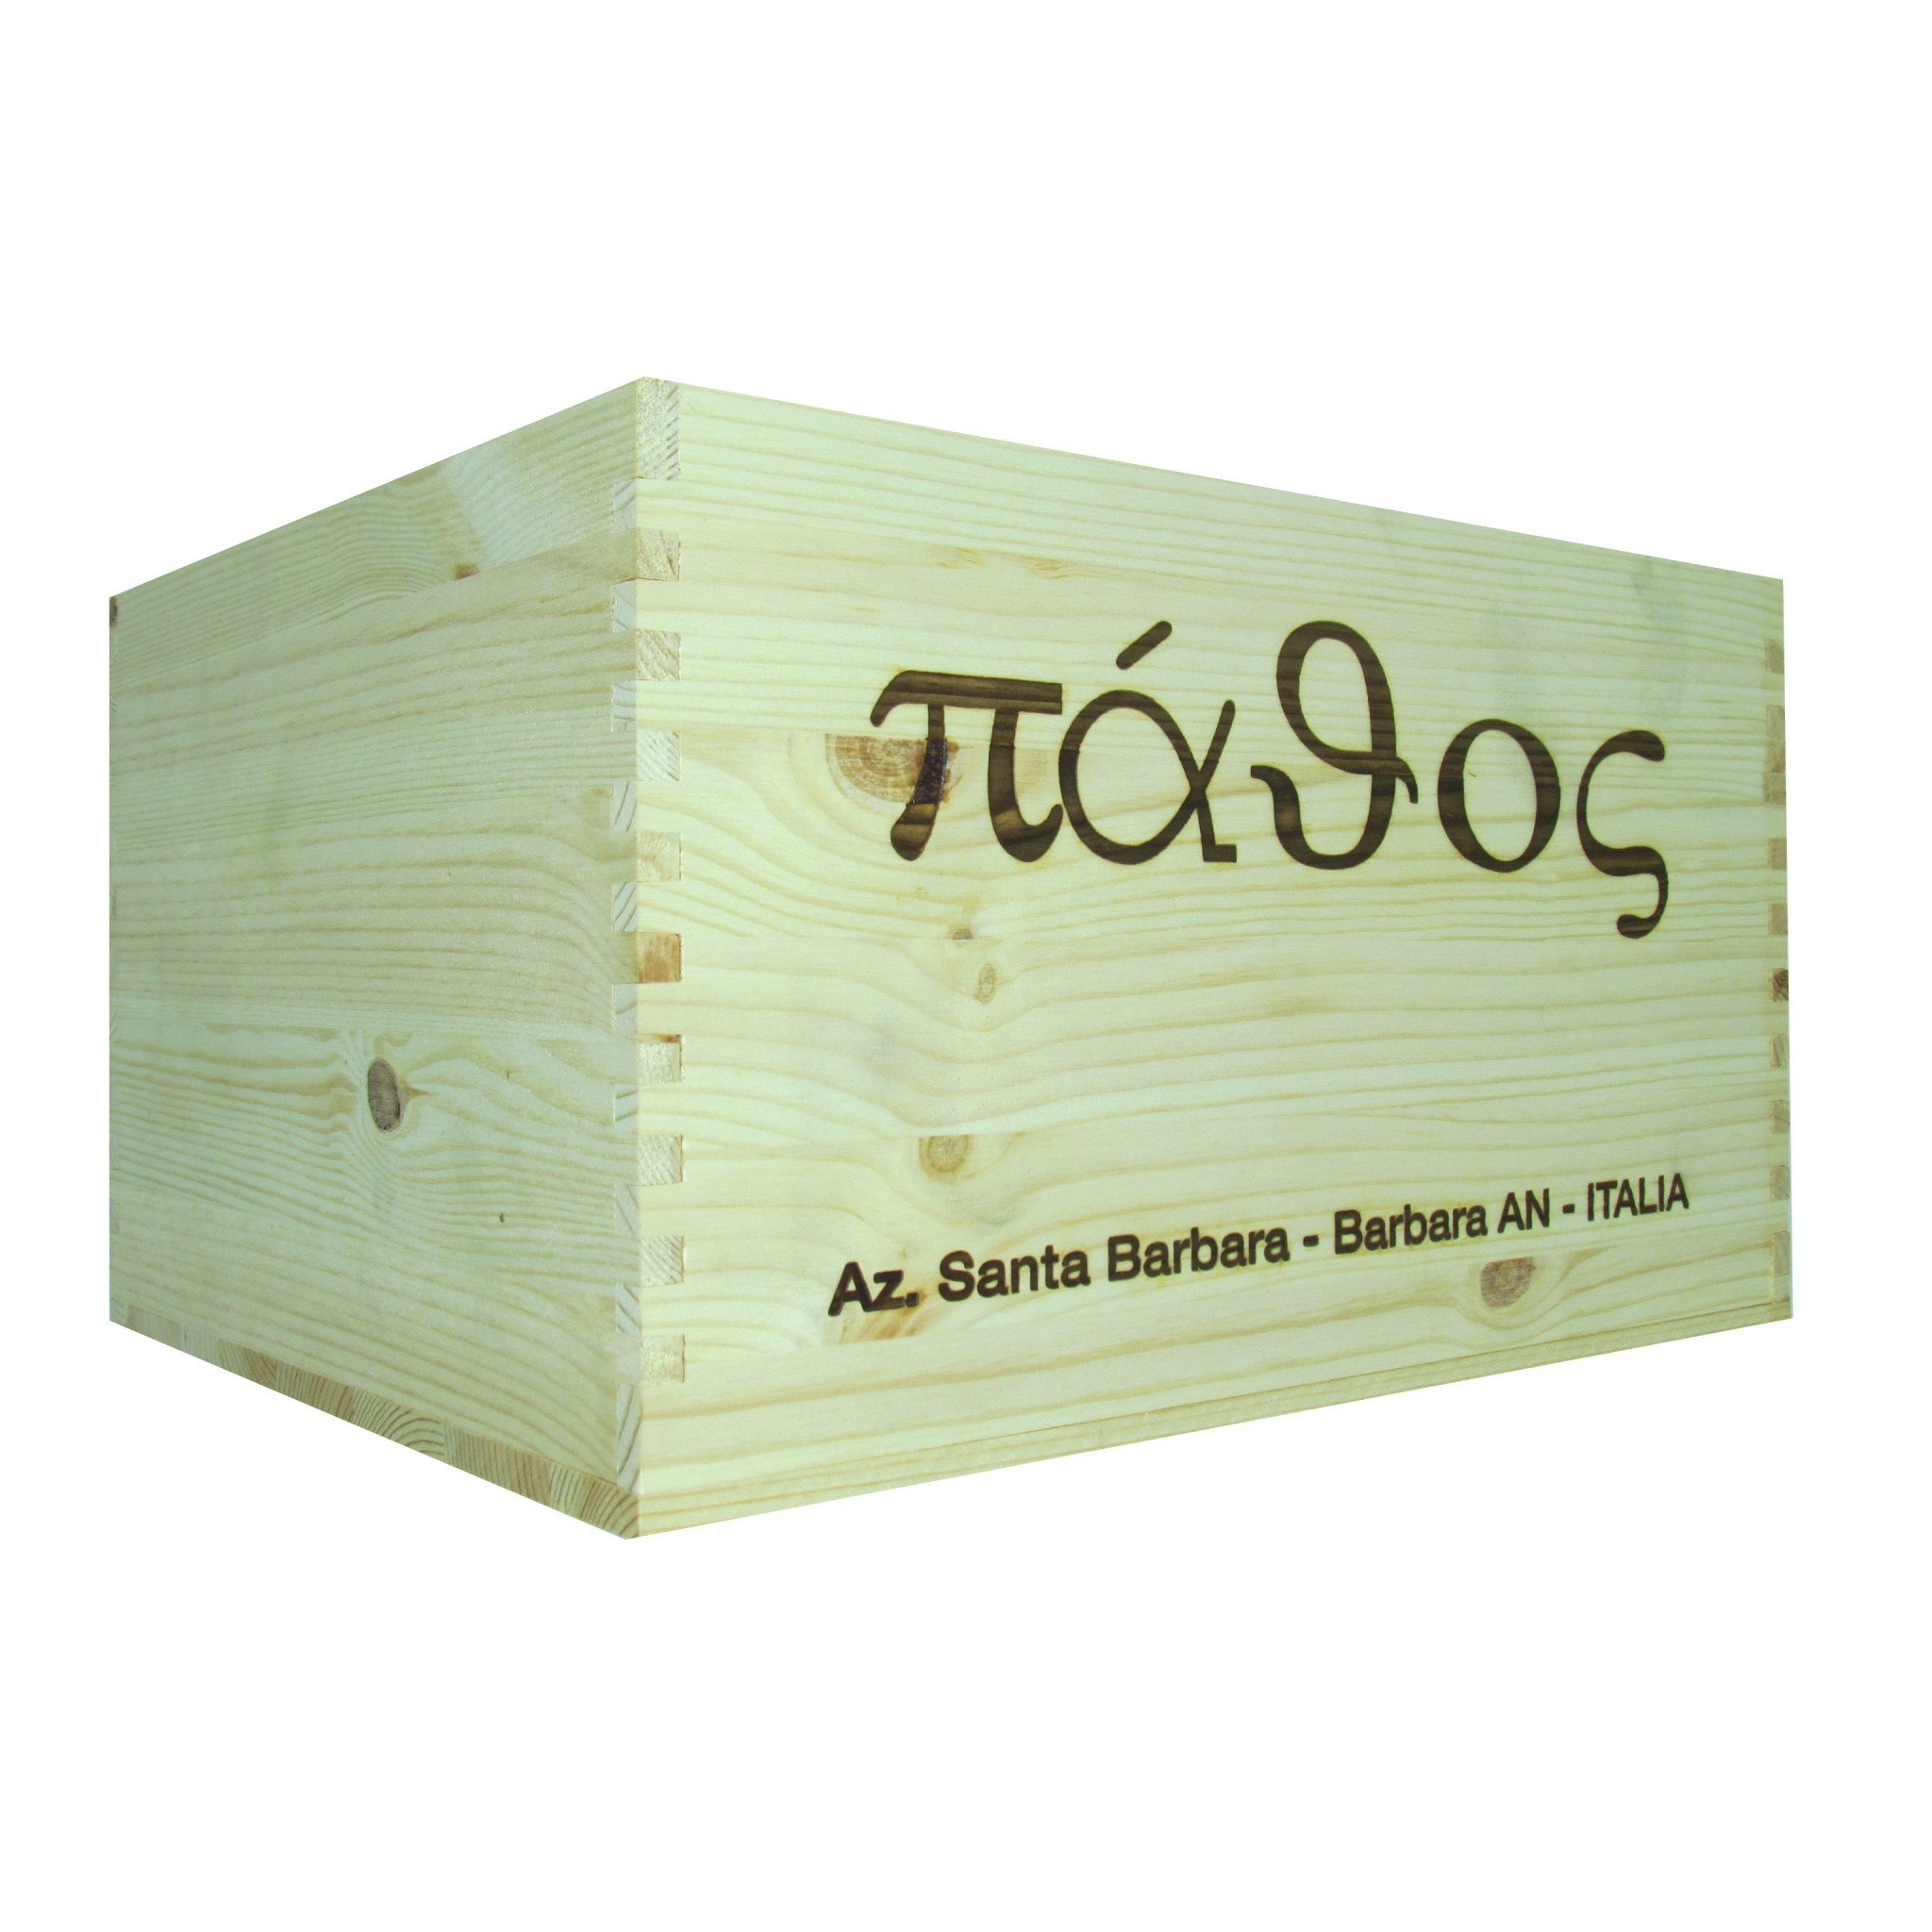 Vendita online cassette di legno per arredare. Cassettine di legno per il  vino utillate come complementi d'arredo design.